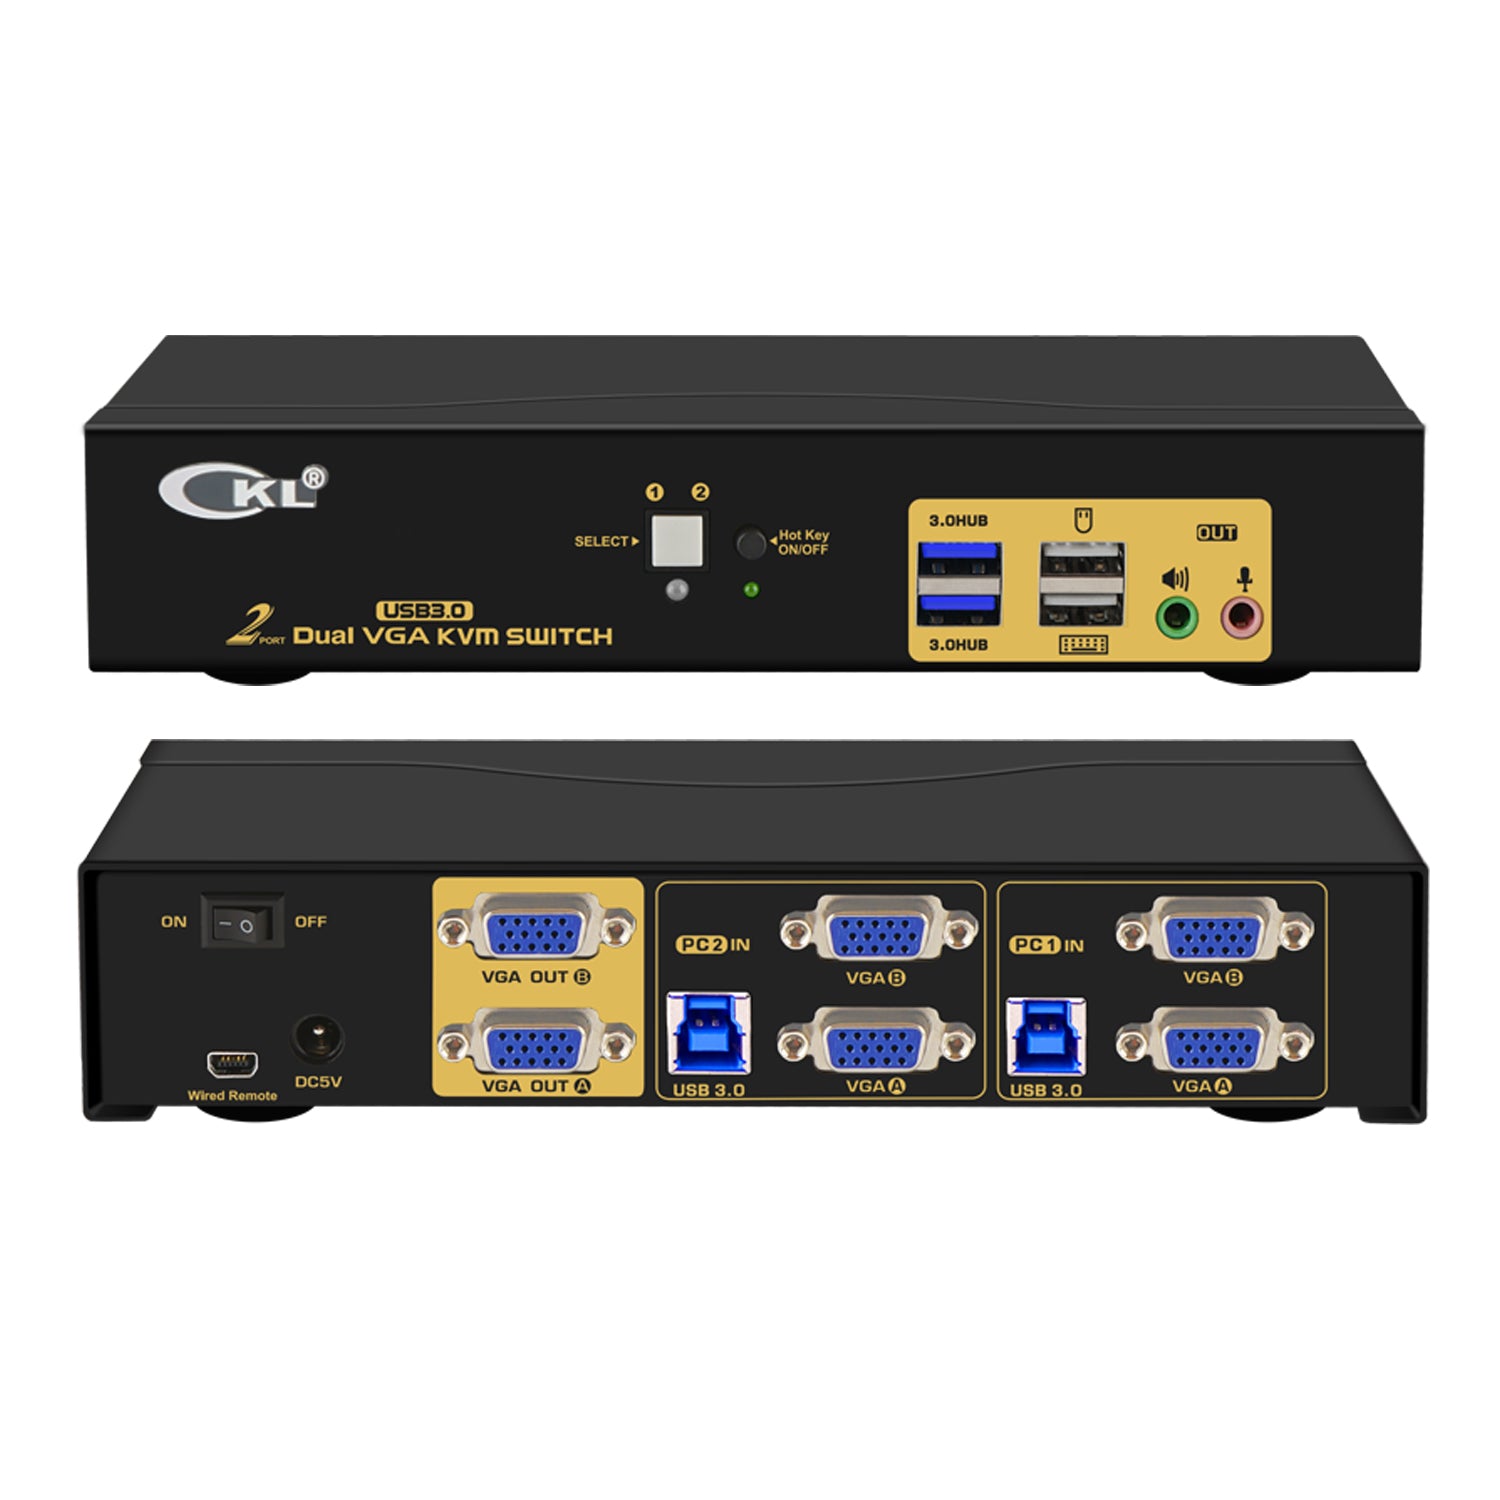 CKL 2 Port USB 3.0 VGA KVM Switch Dual Monitor Extended Display Supports 2048 * 1536@450MHz CKL-822UA-3